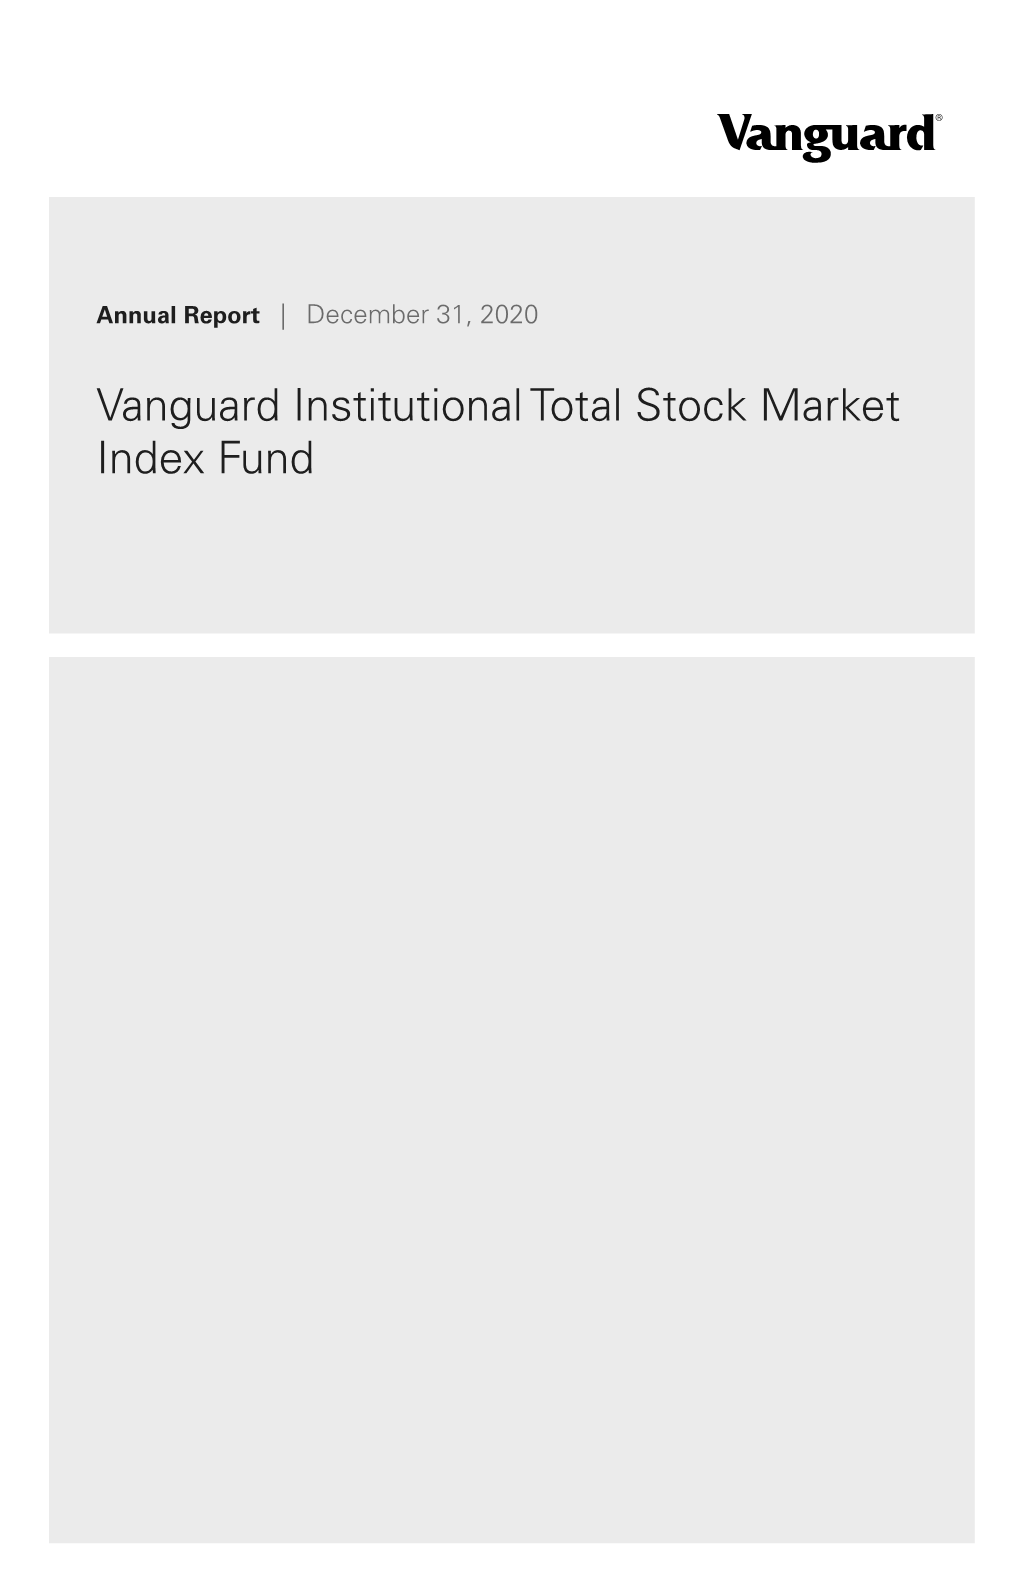 Vanguard Institutional Total Stock Market Index Fund Annual Report